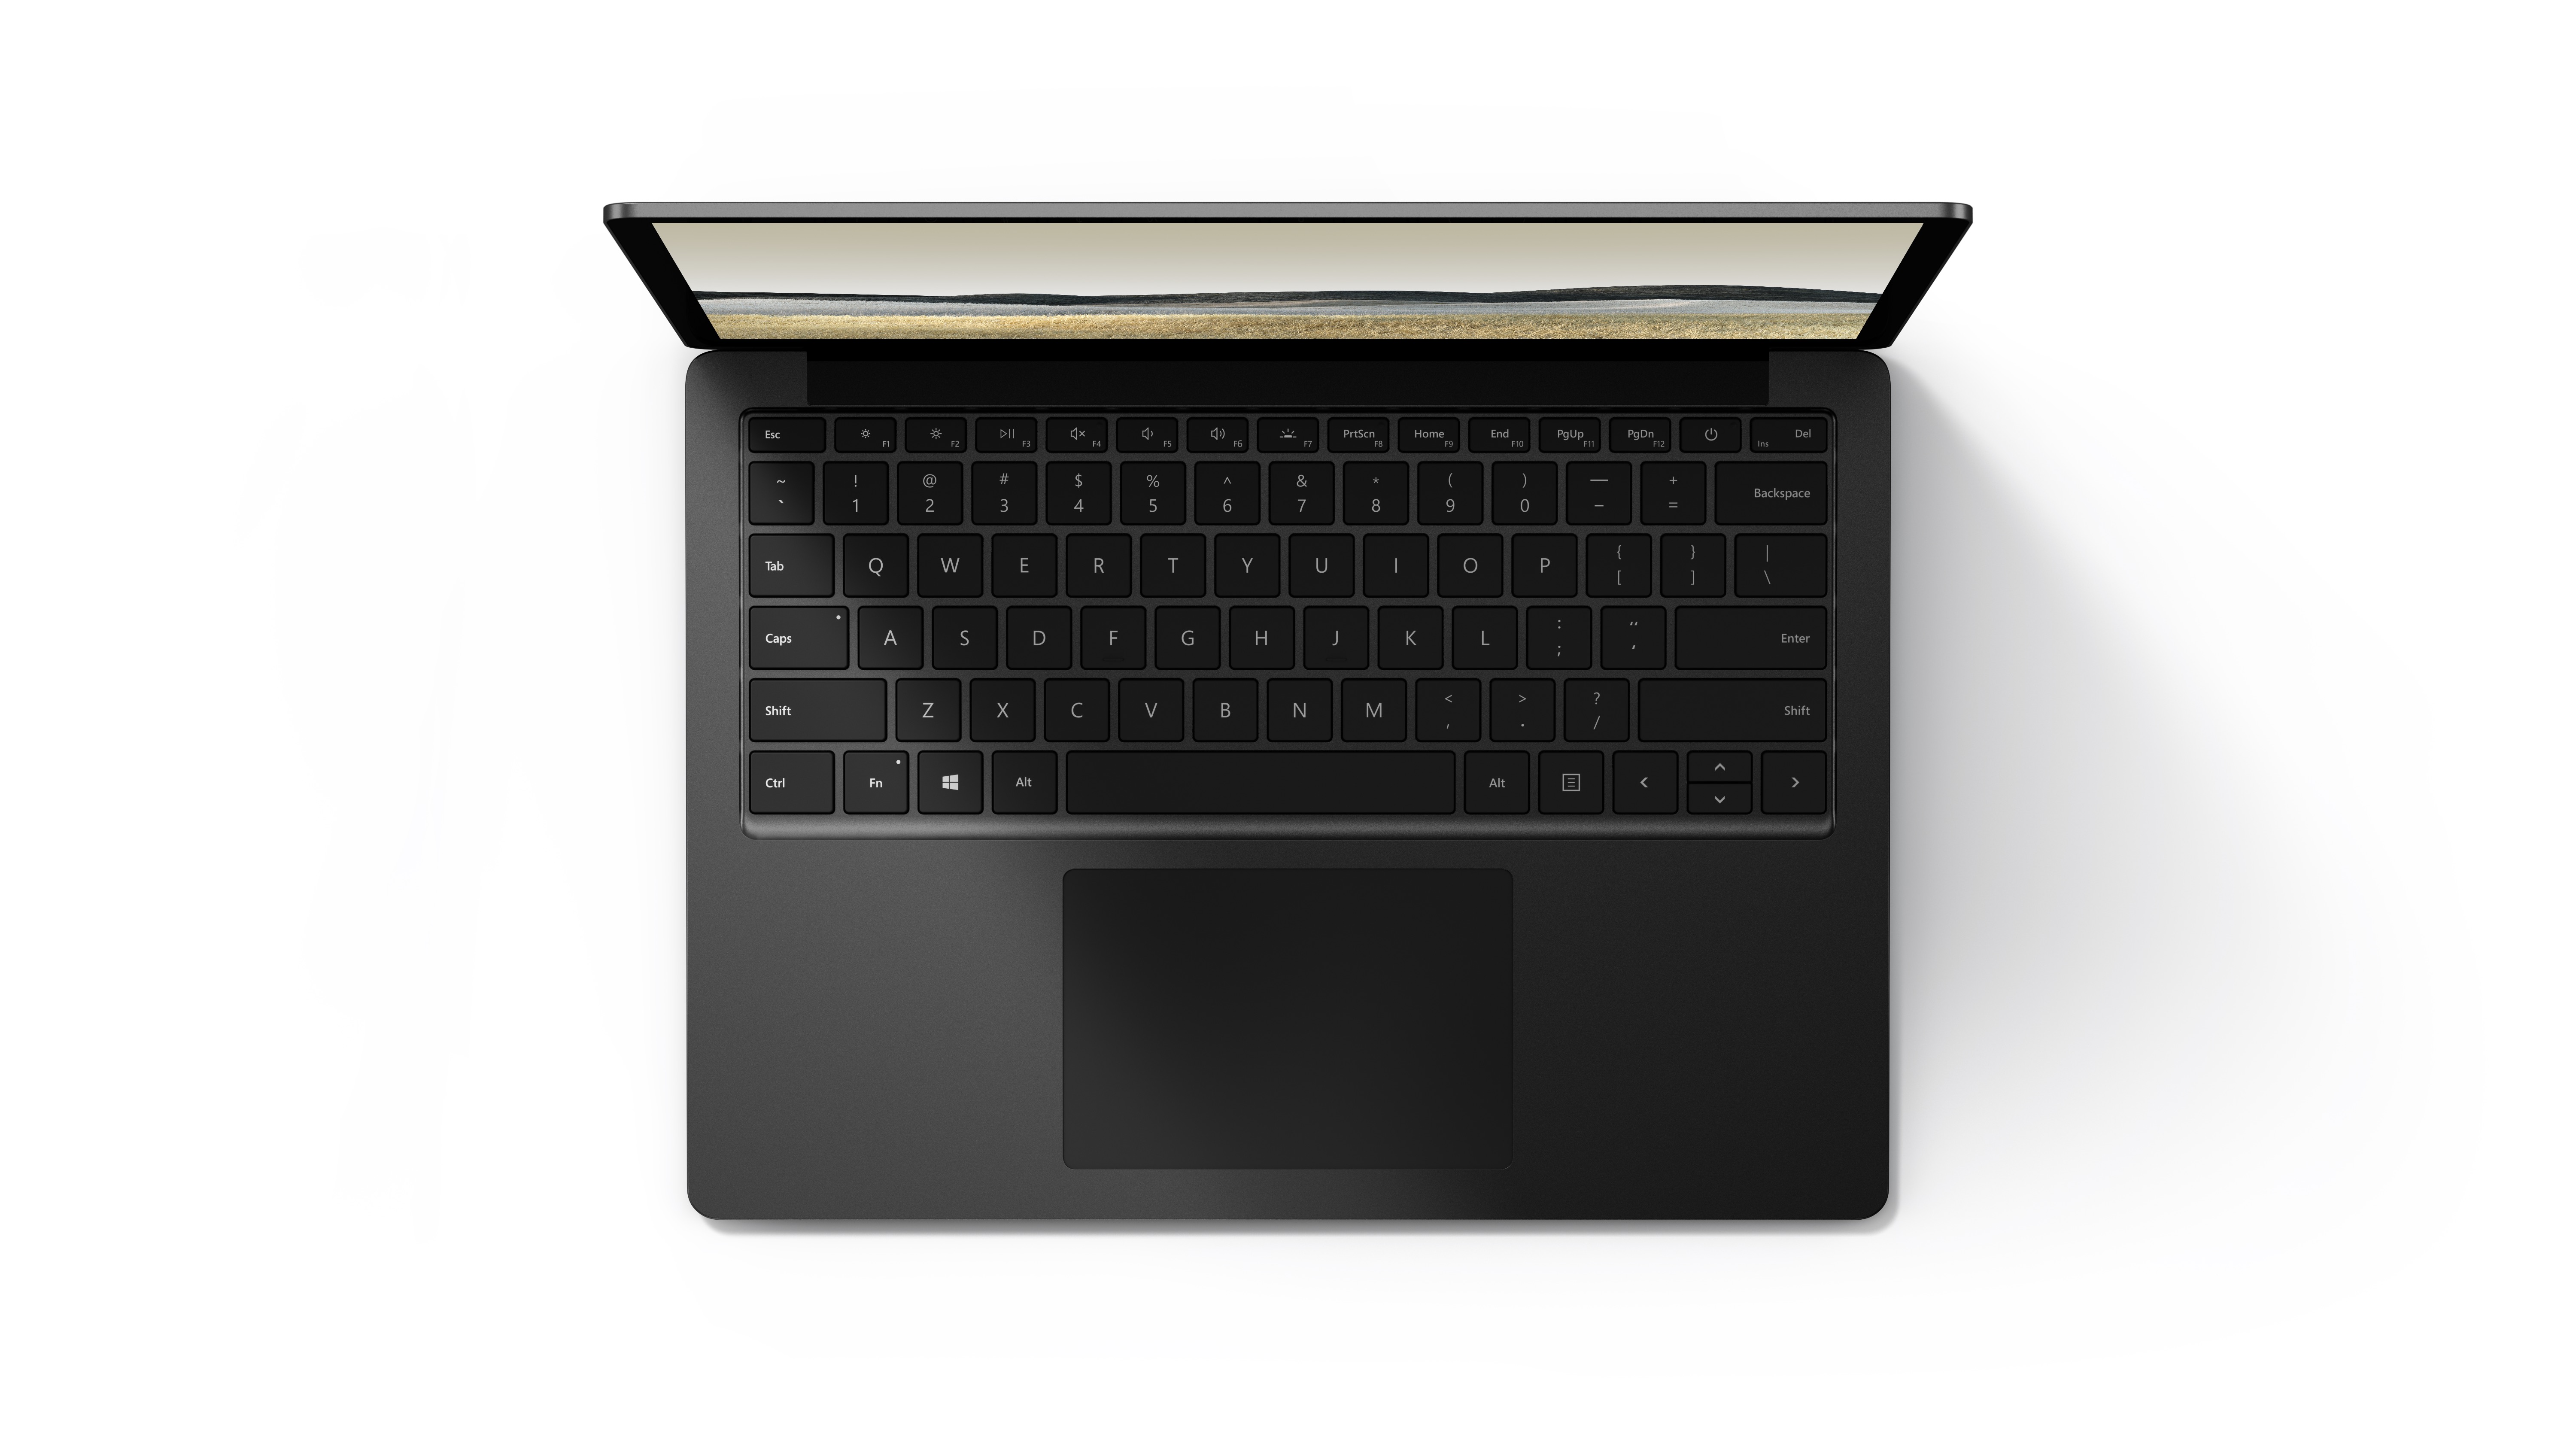 Microsoft Surface Laptop 3, 13.5" Touch-Screen, Intel Core i7-1035G7, 16GB Memory, 256GB SSD, Iris Plus Graphics 950, Windows 10 Home, Matte Black, VEF-00022 - image 3 of 6